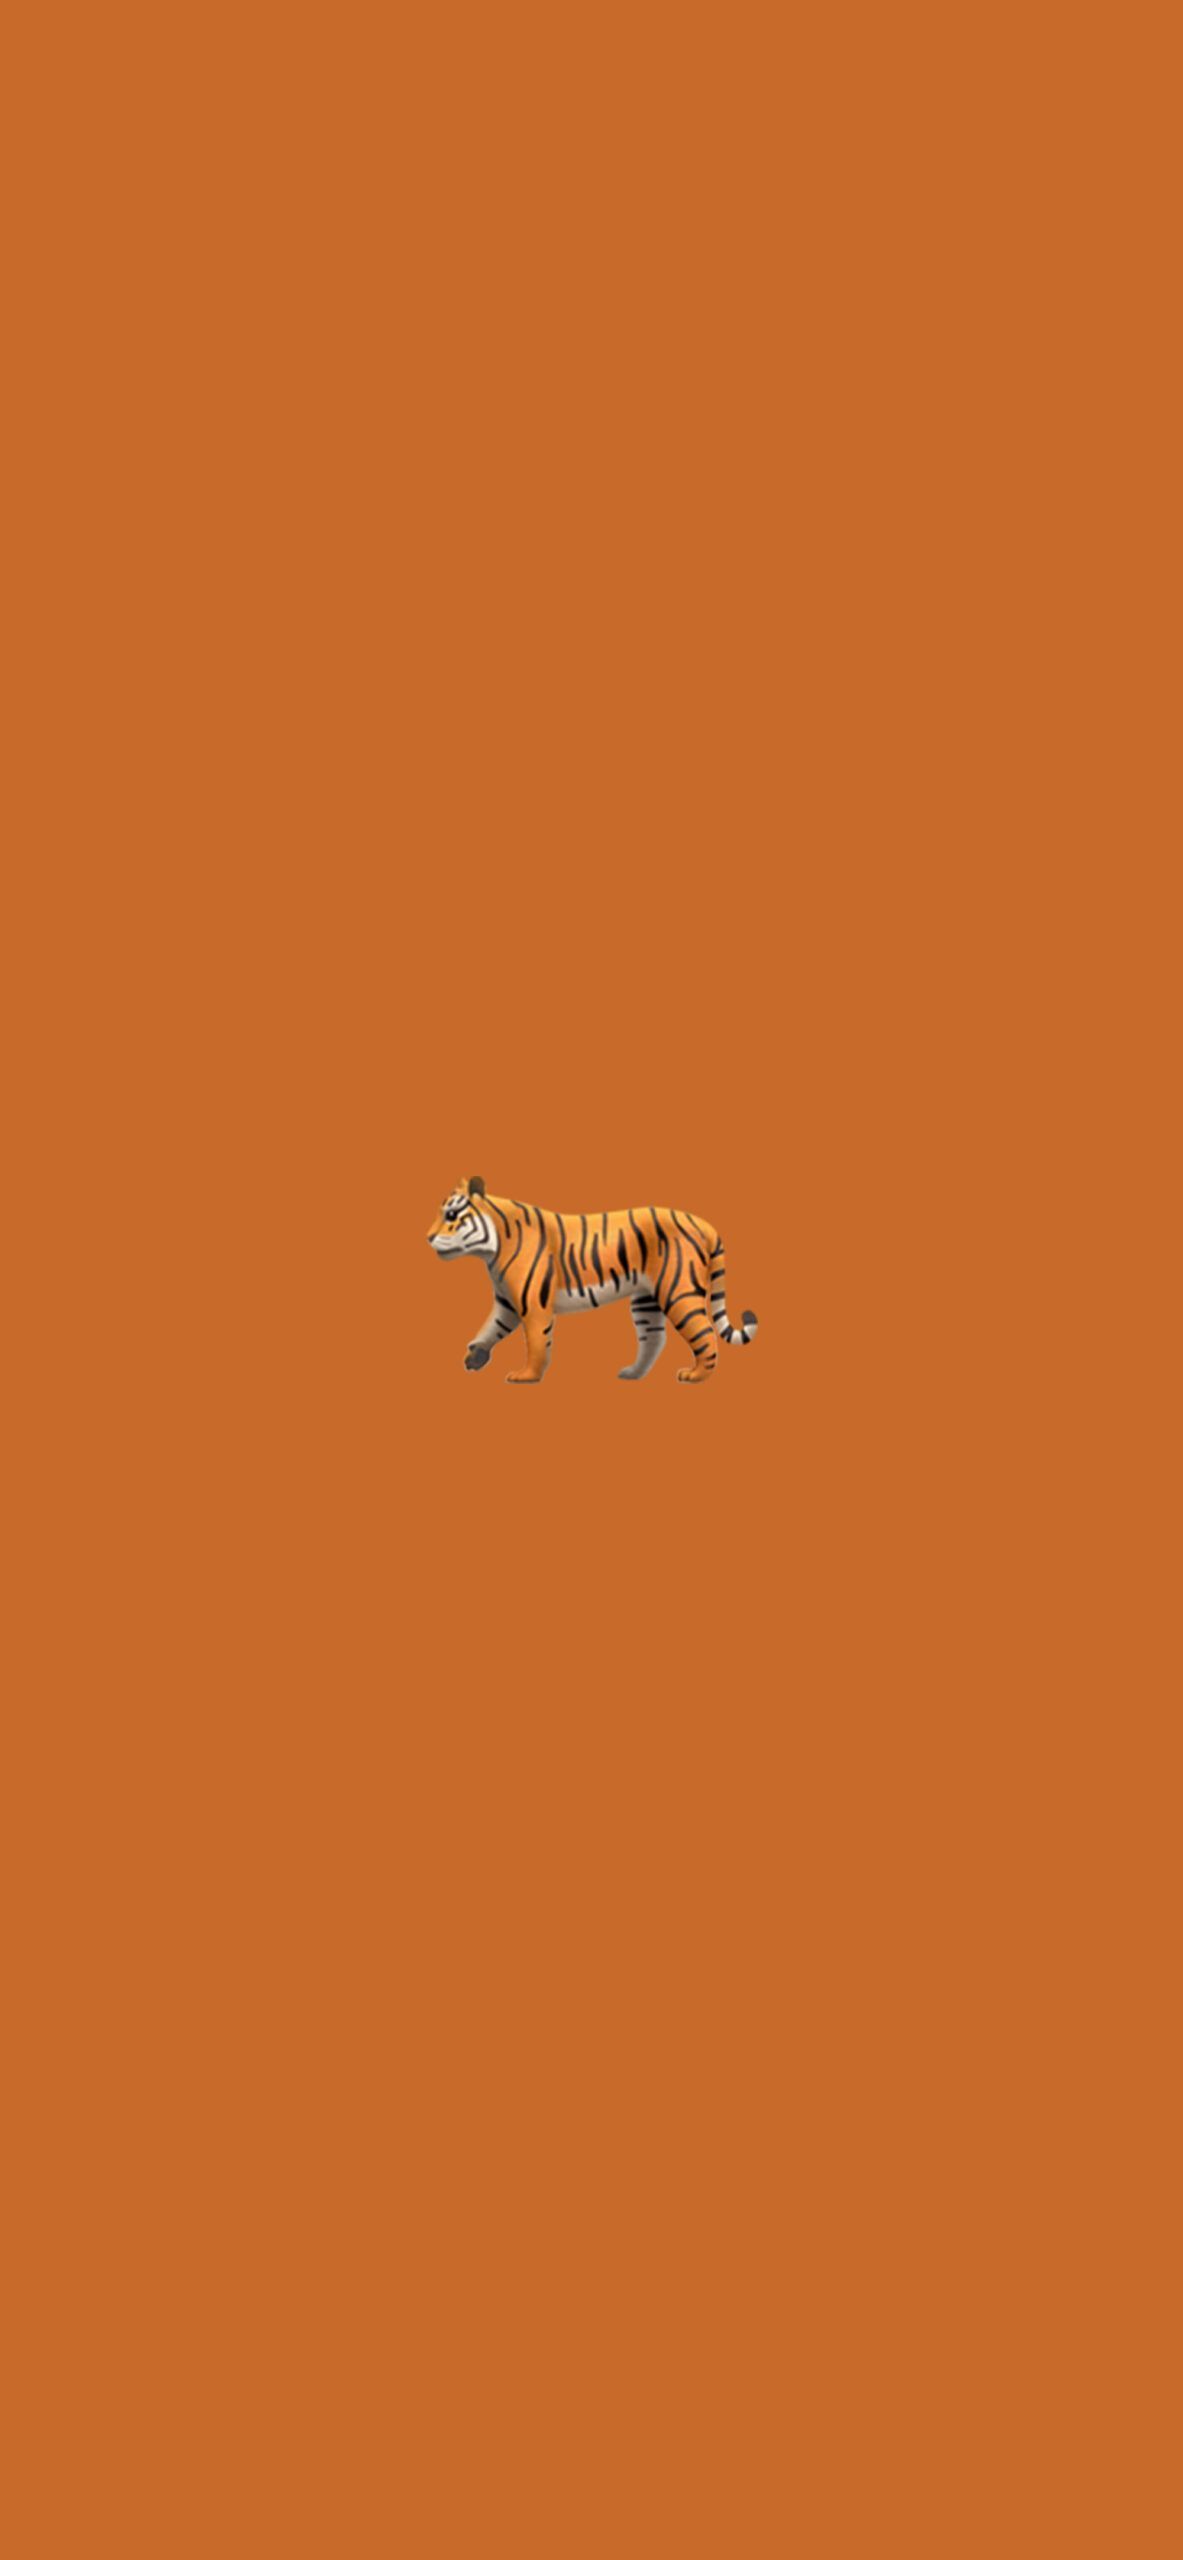 A tiger running on an orange background - Cat, tiger, leopard